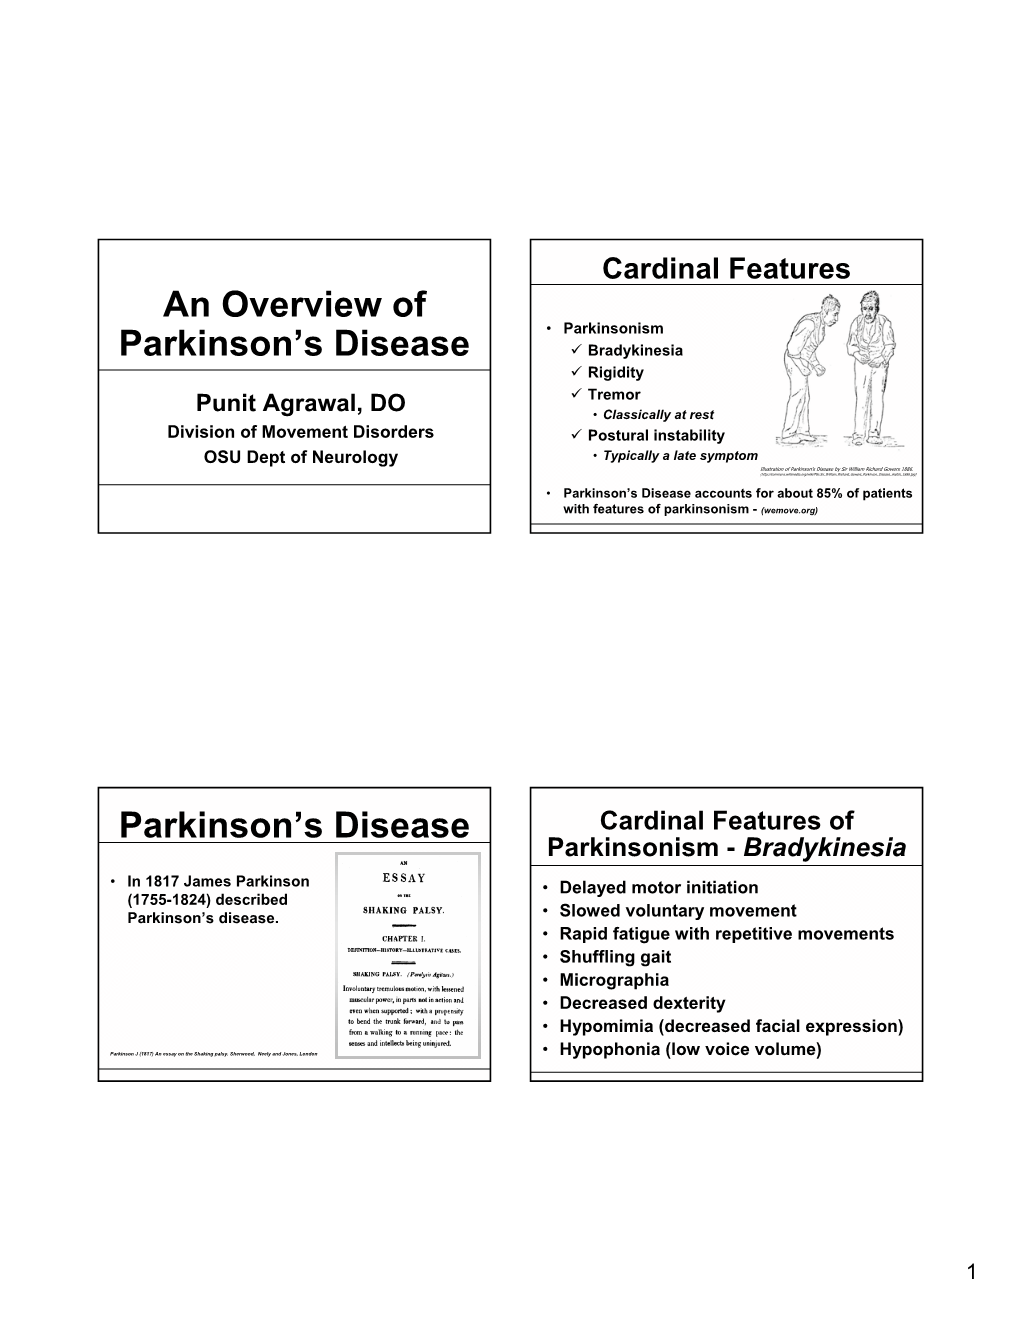 Parkinson's Disease by Sir William Richard Gowers 1886